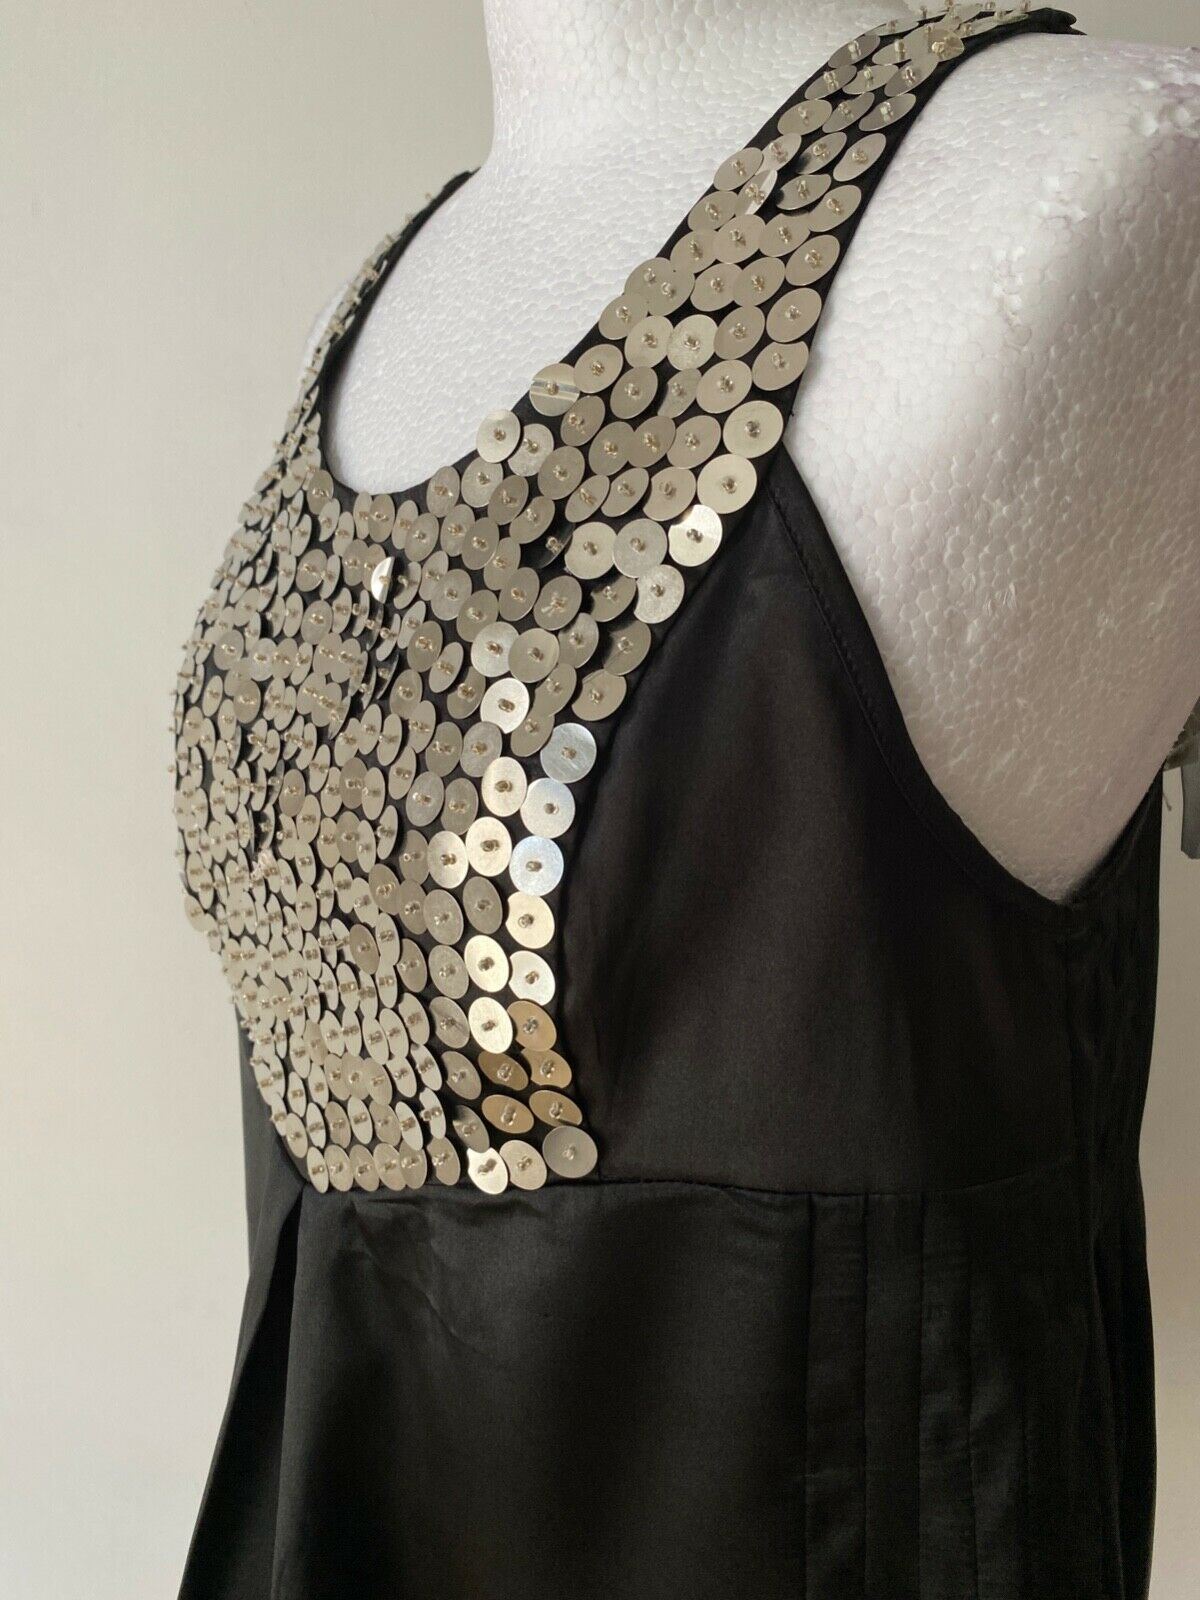 Amy Paris Black Sleeveless Satin Top Size 10 Sequin Detail